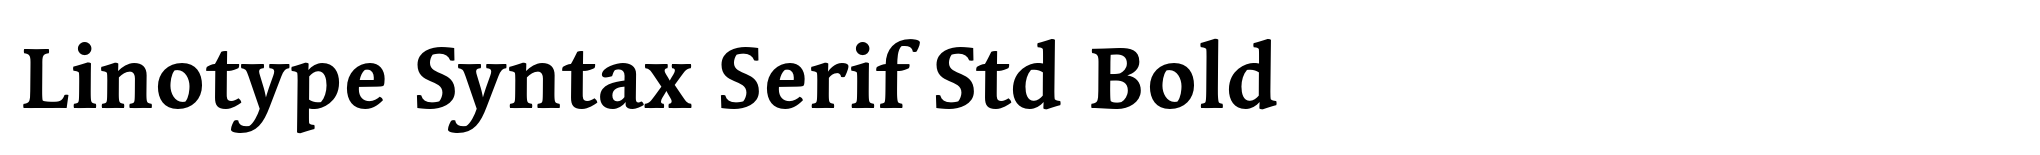 Linotype Syntax Serif Std Bold image